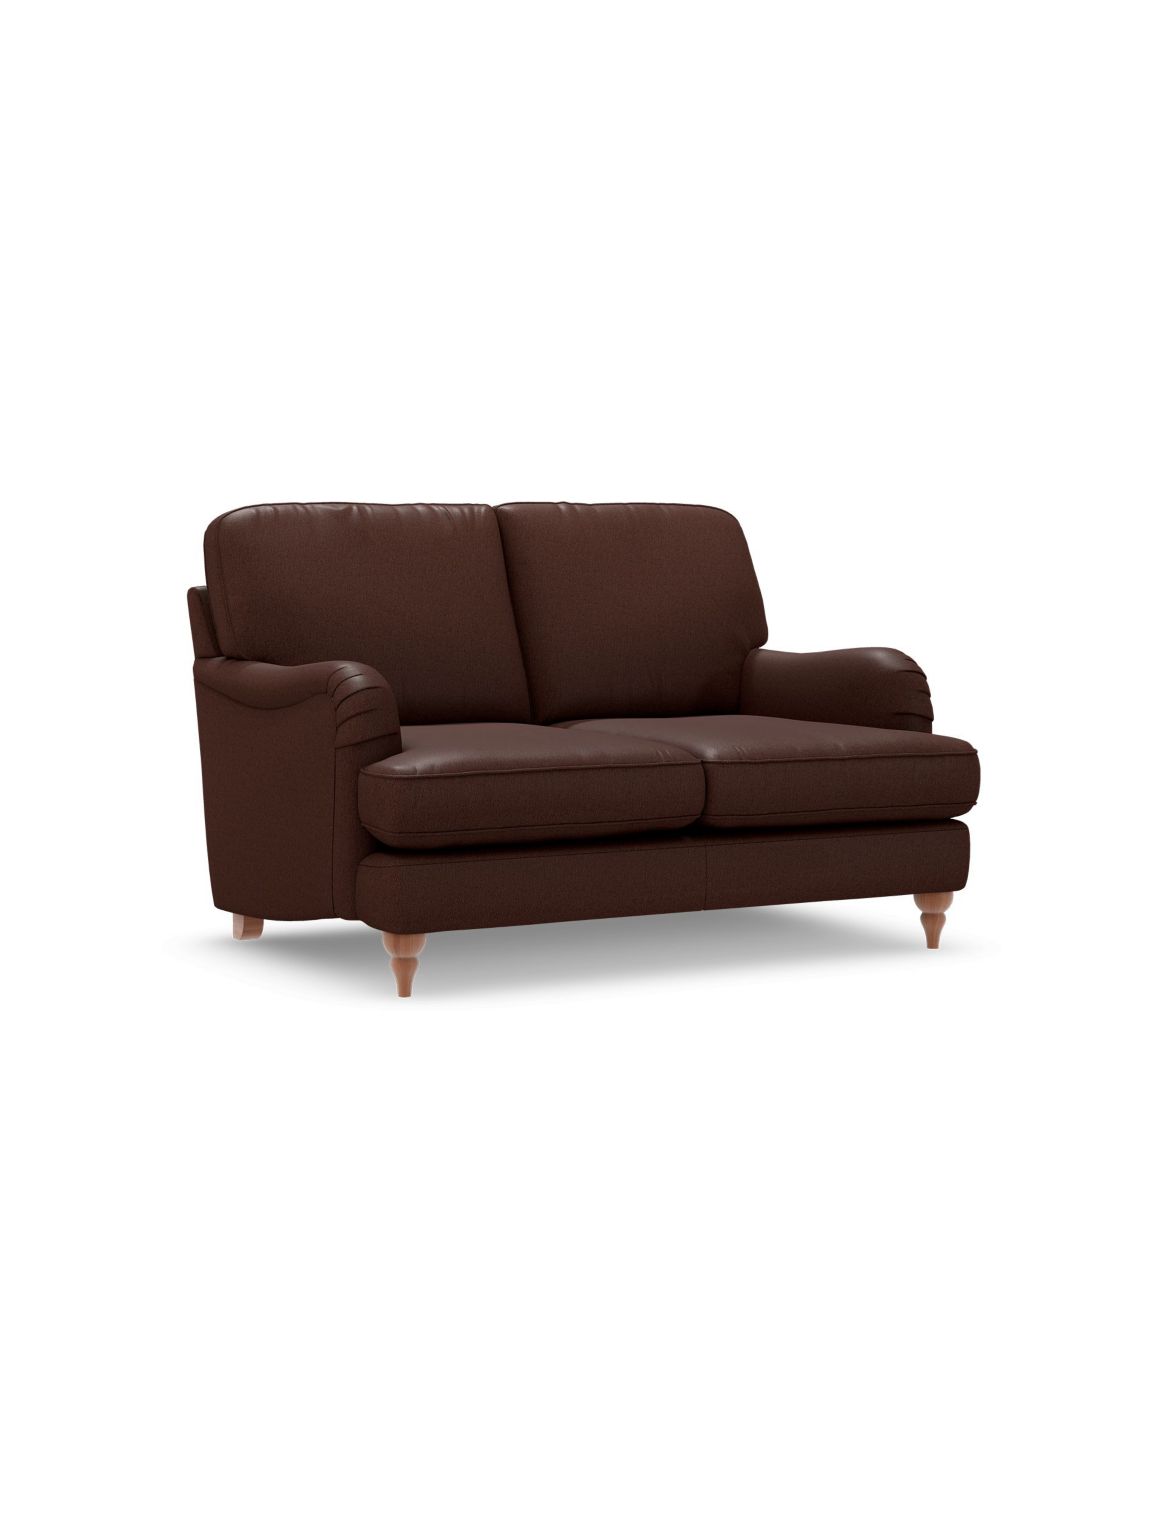 Rochester Compact Sofa brown